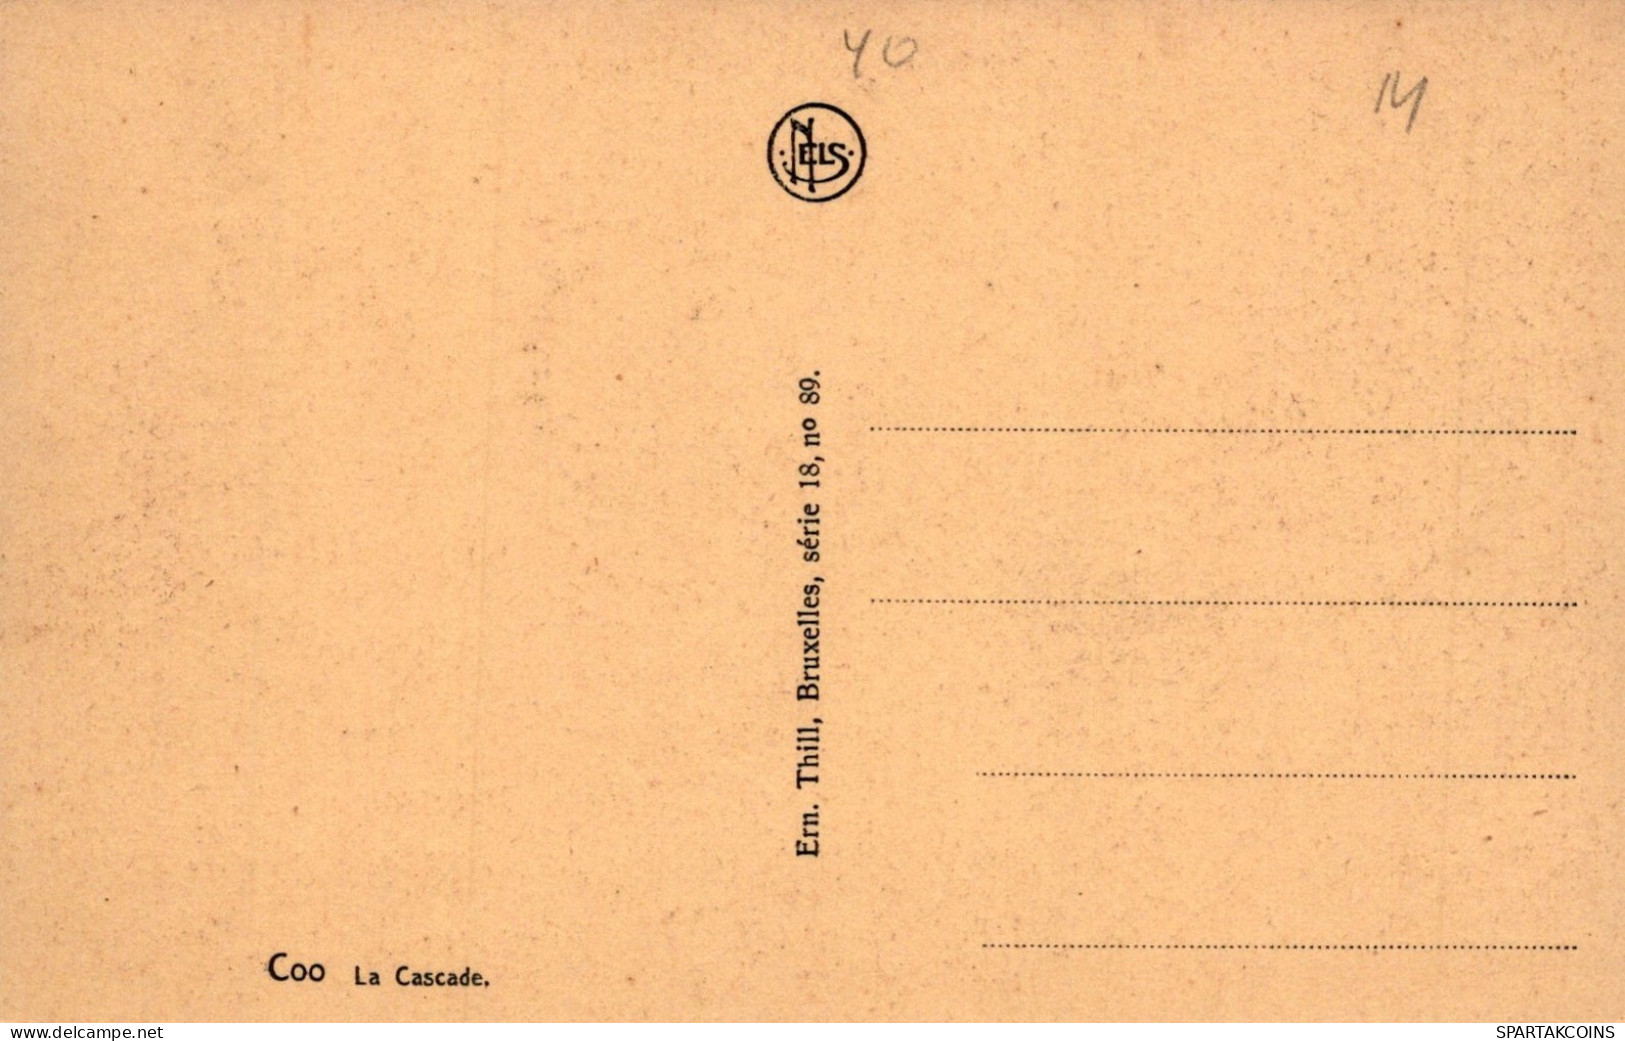 BELGIEN COO WASSERFALL Provinz Lüttich (Liège) Postkarte CPA Unposted #PAD159.DE - Stavelot